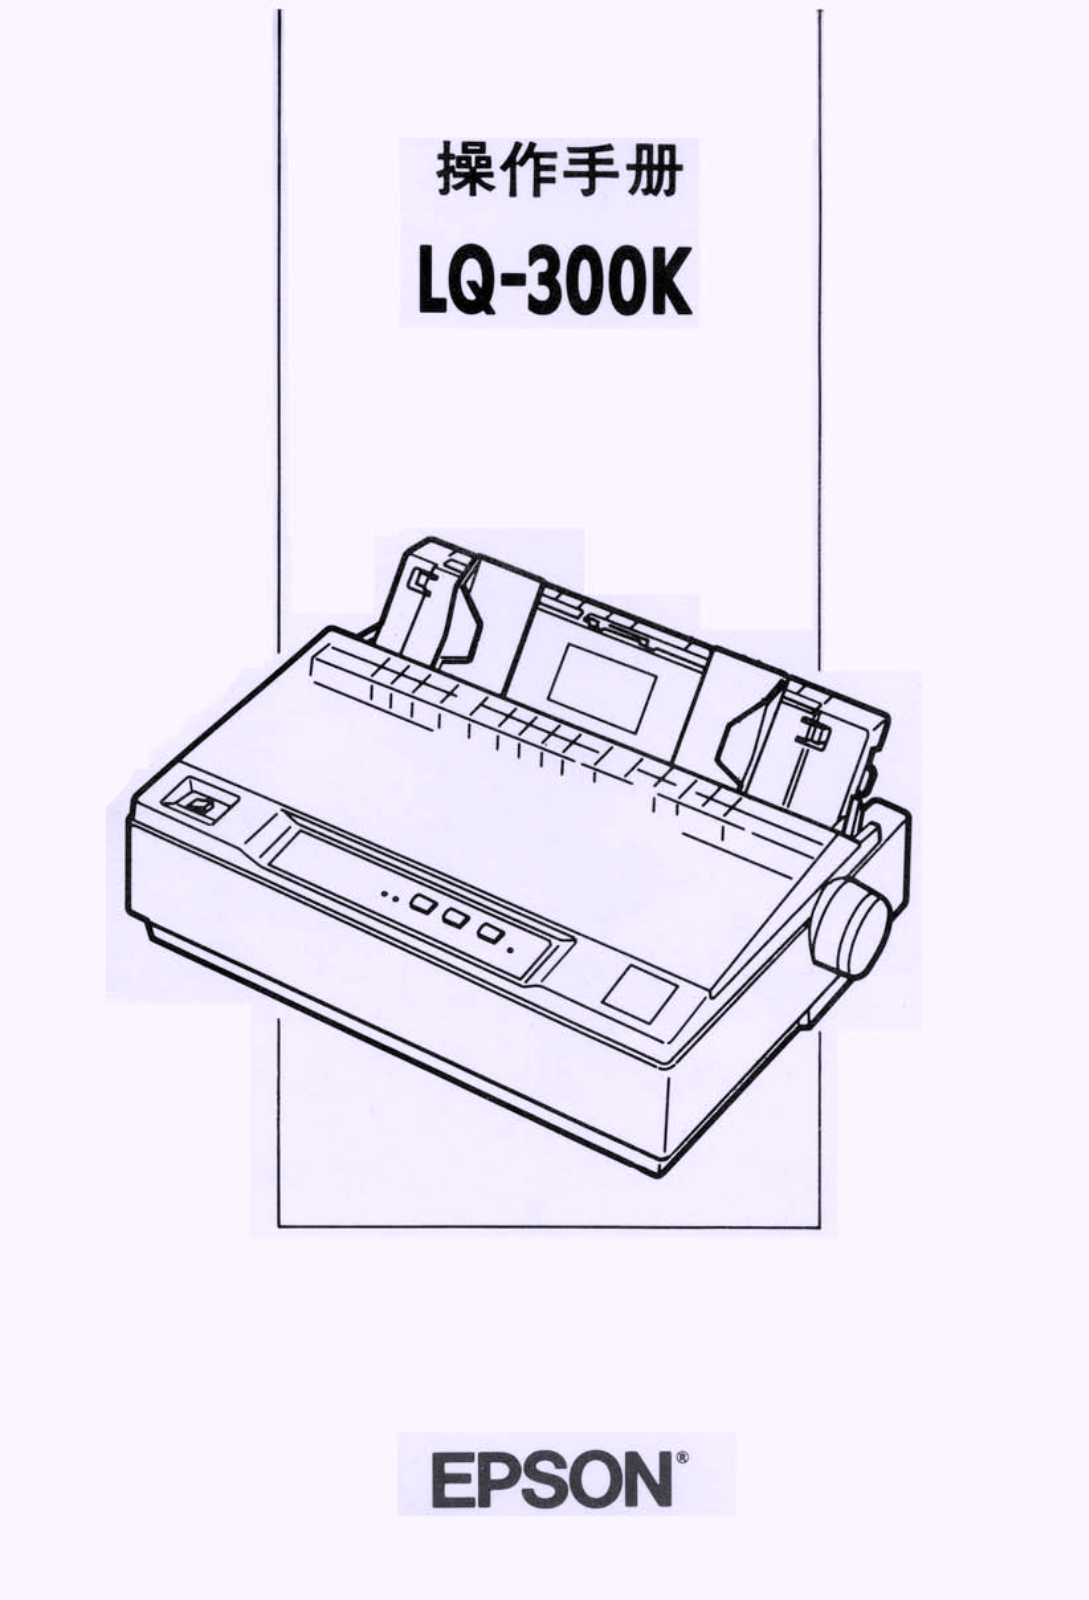 EPSON LQ-300K service manual